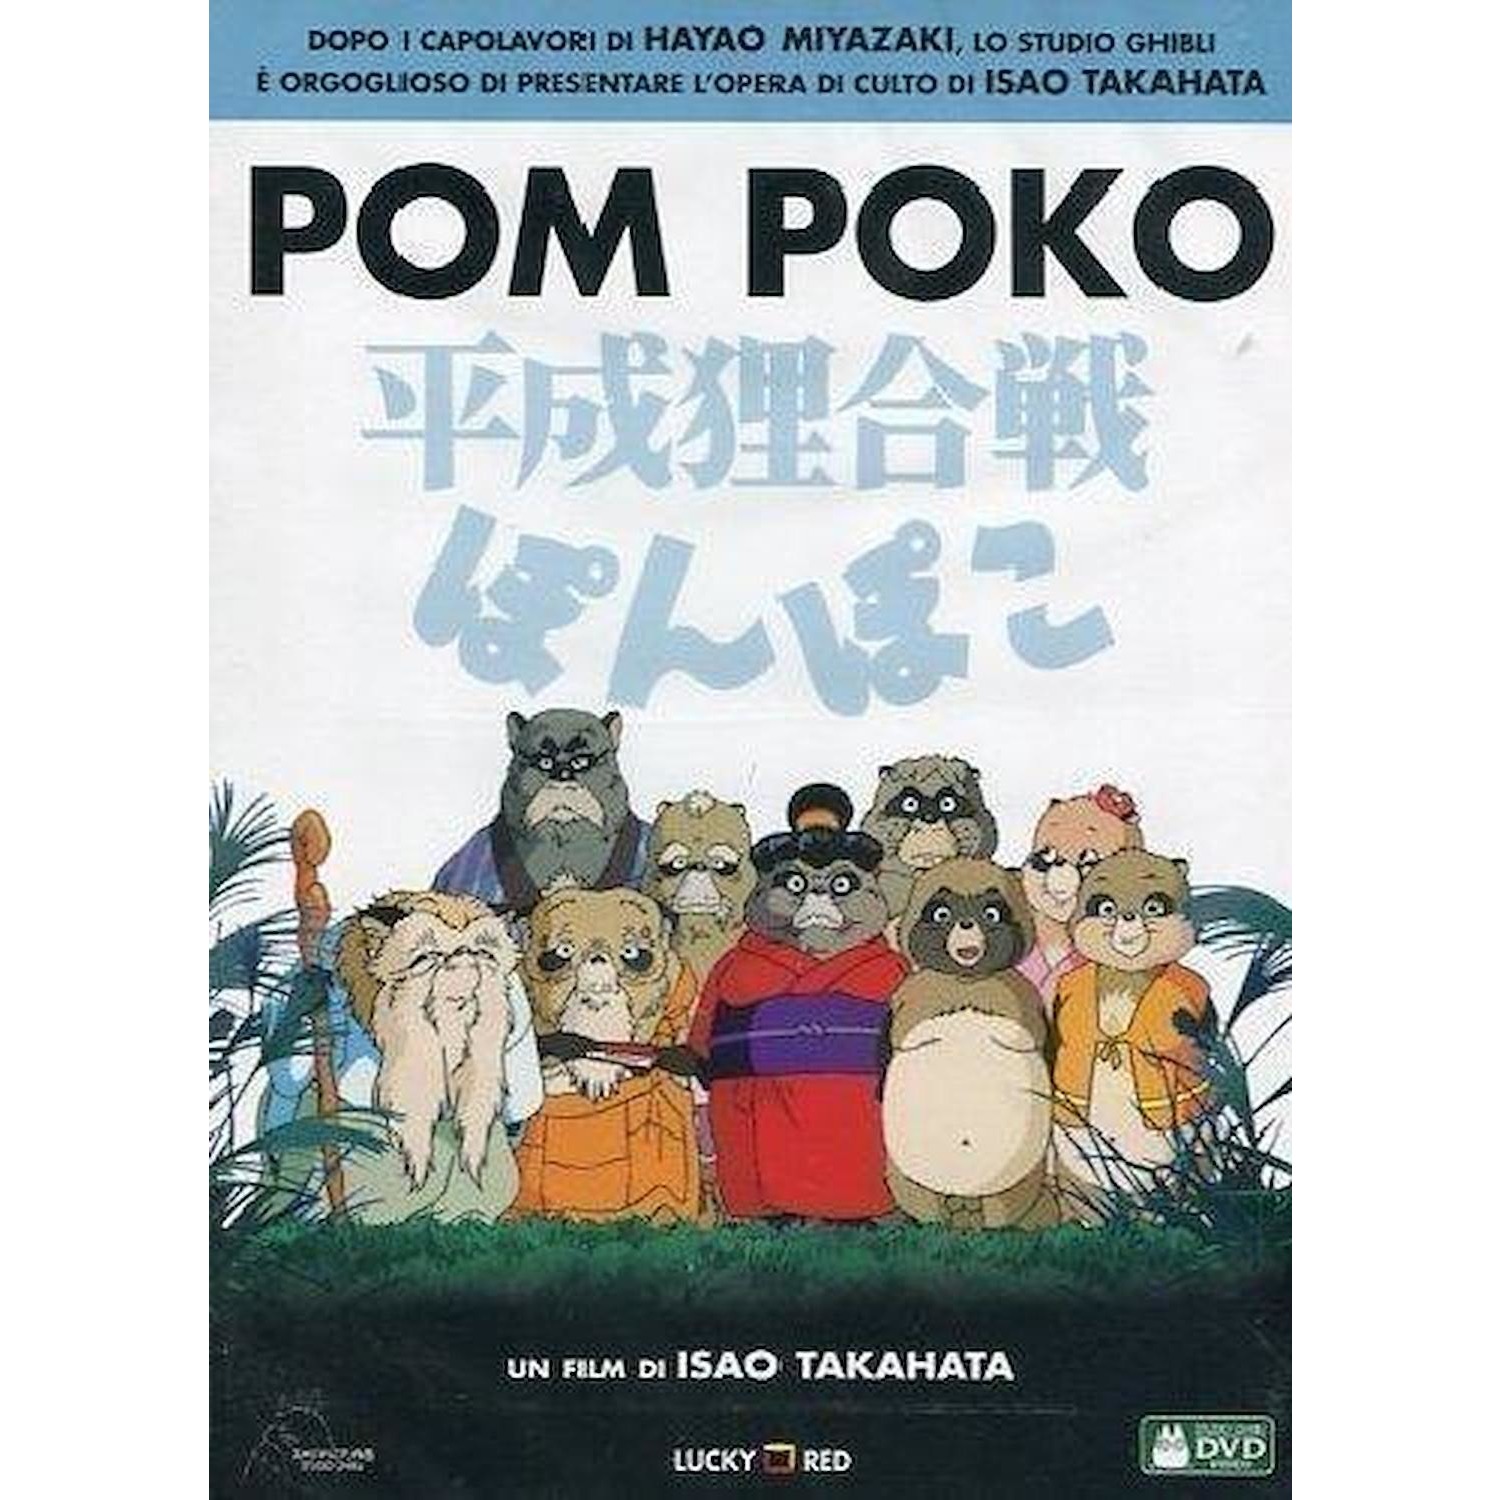 Immagine per DVD Pom Poko da DIMOStore